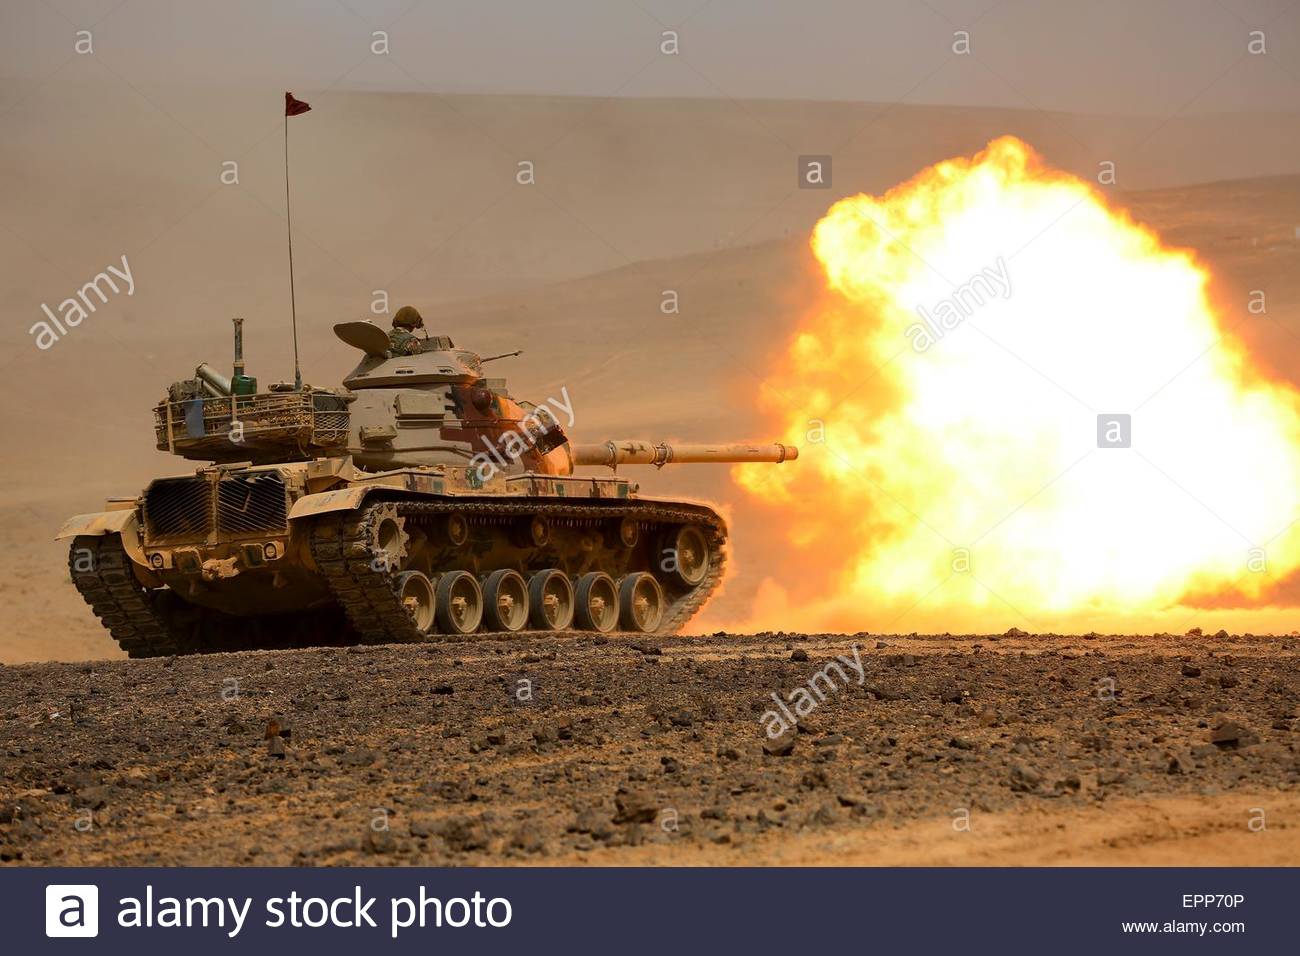 aqaba-jordan-19th-may-2015-jordanian-m60a1-tank-fires-a-live-round-EPP70P.jpg